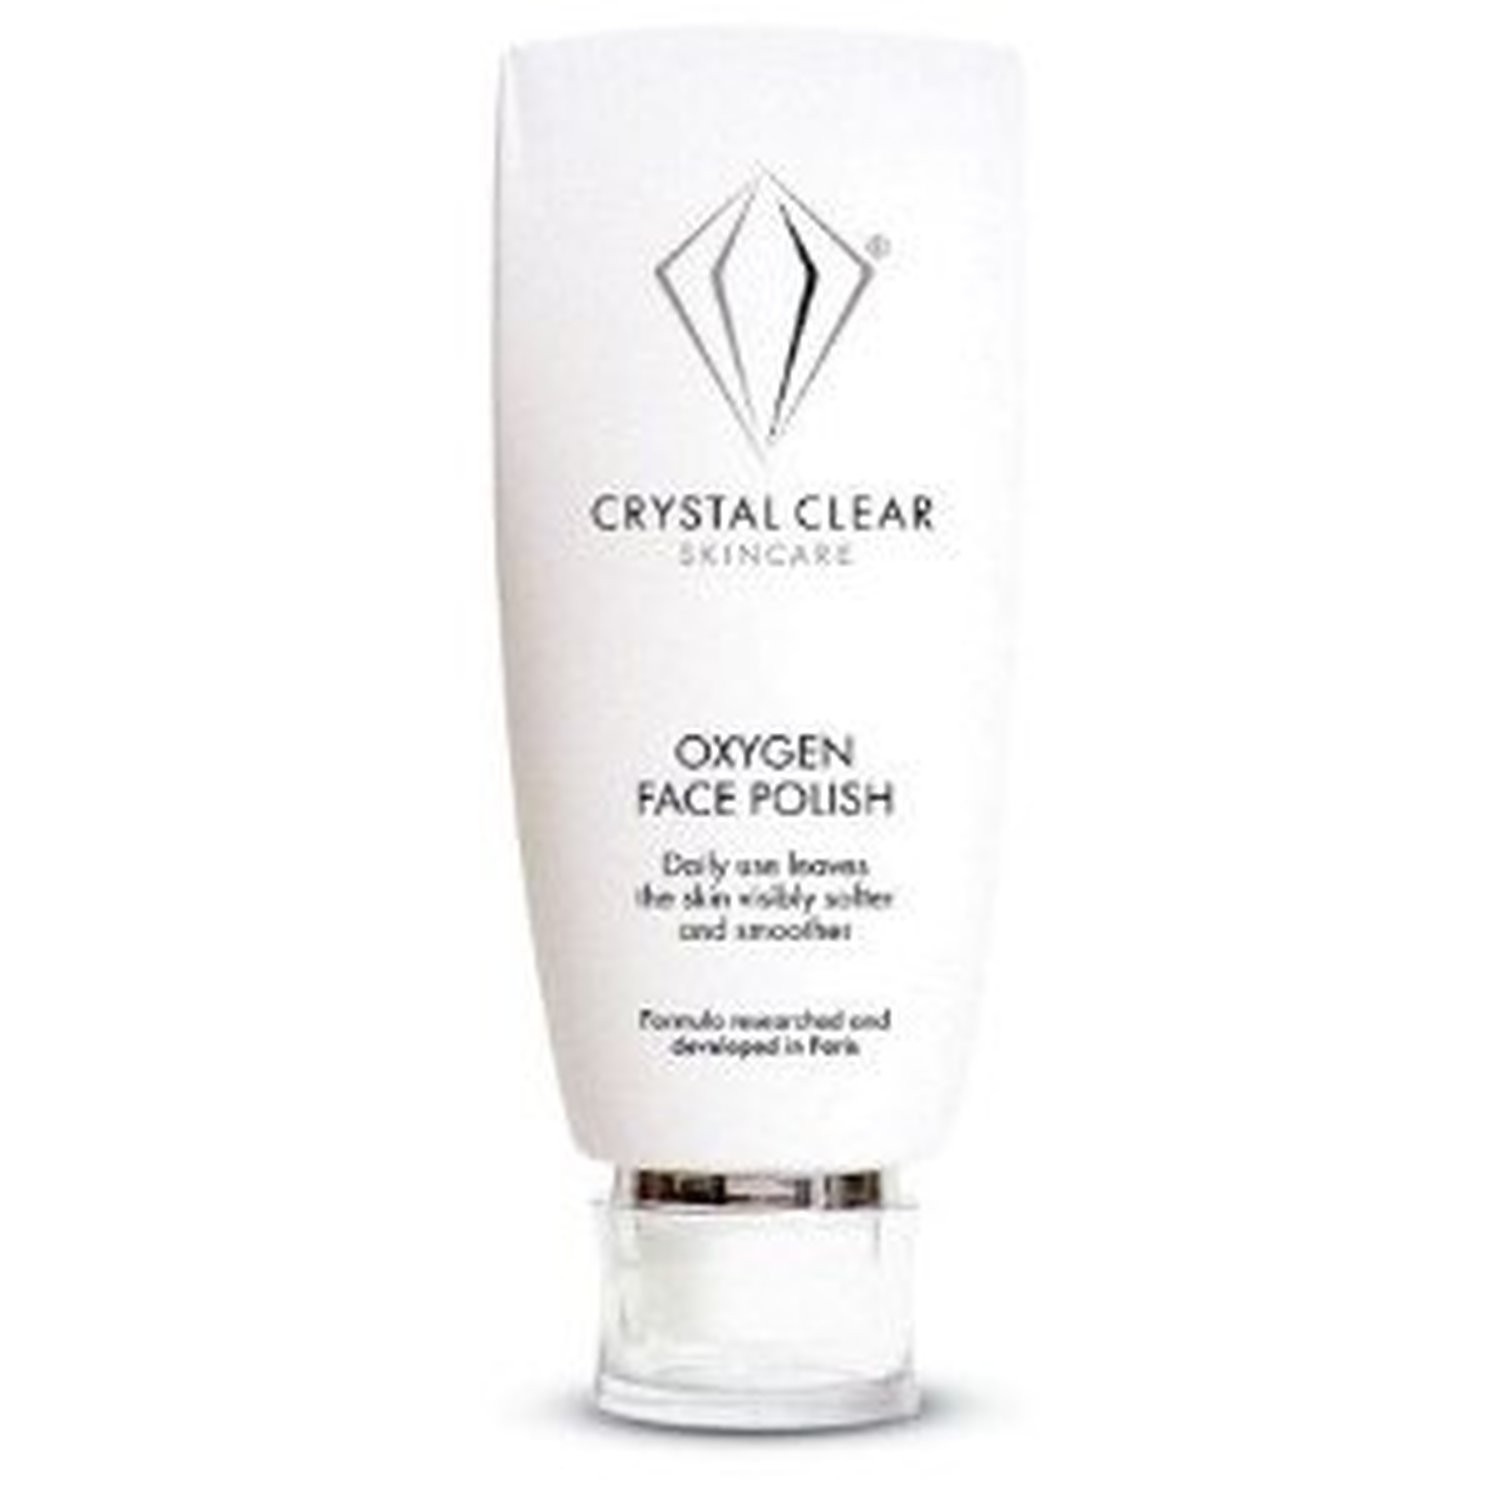 Crystal Clear Oxygen Face Polish Exfoliating Exfoliator 200ml Smoothing